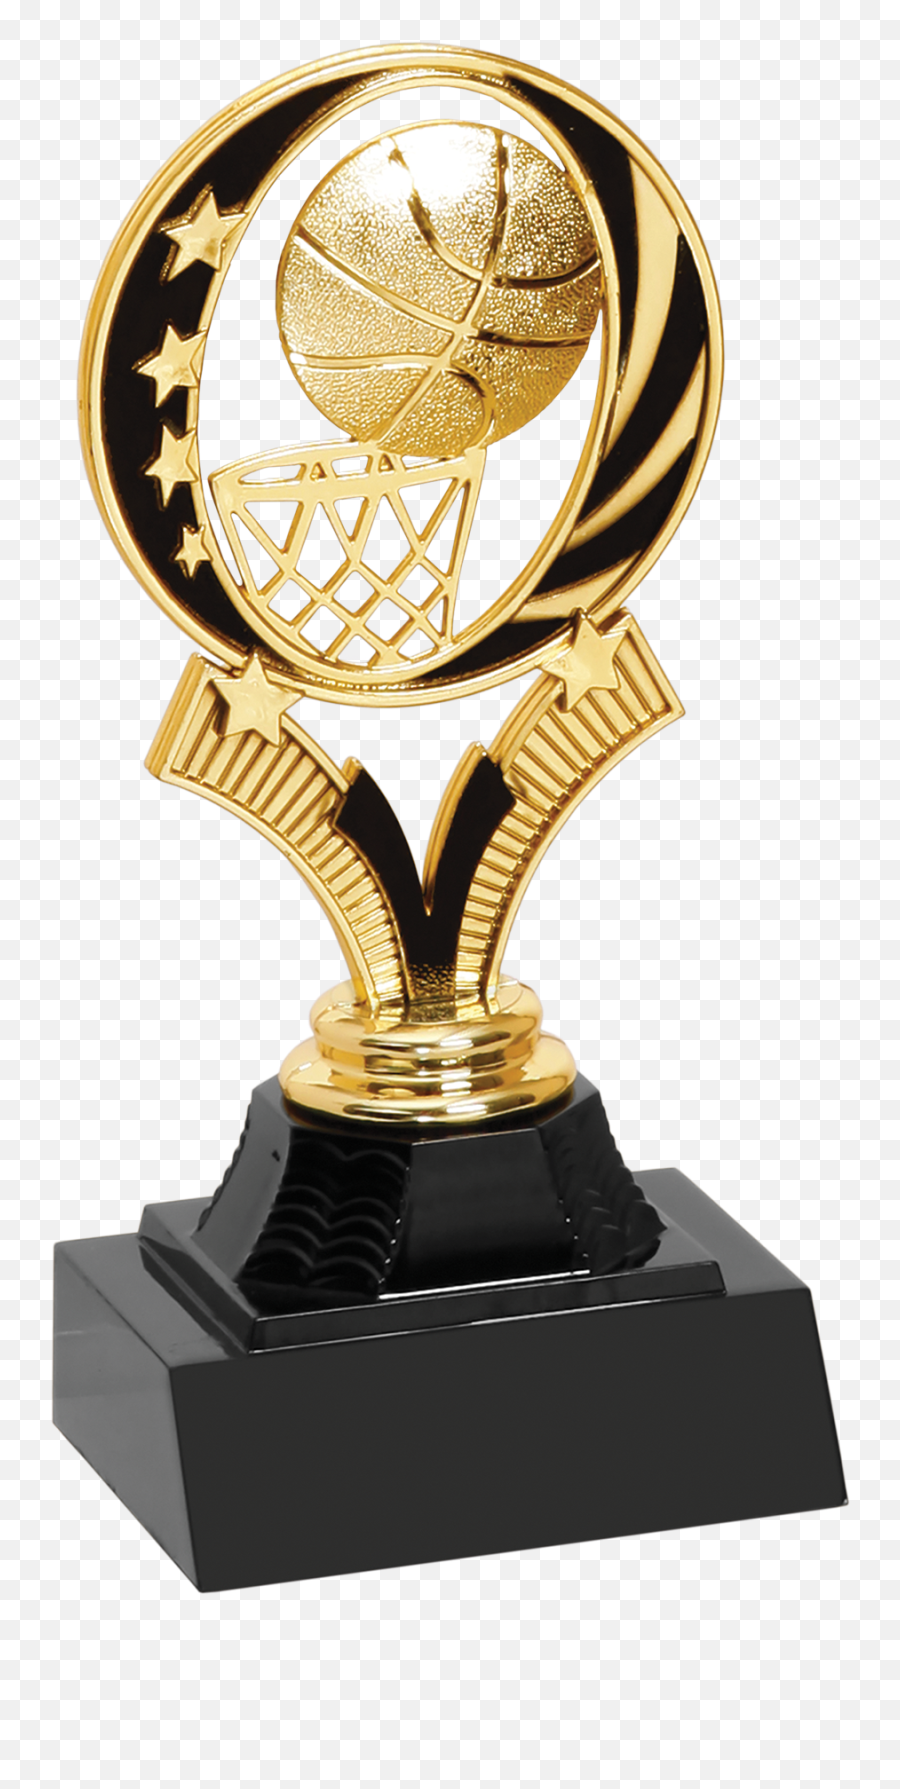 Download S - Trophy Full Size Png Image Pngkit Basketball Trophy Png Emoji,Lombardi Trophy Png